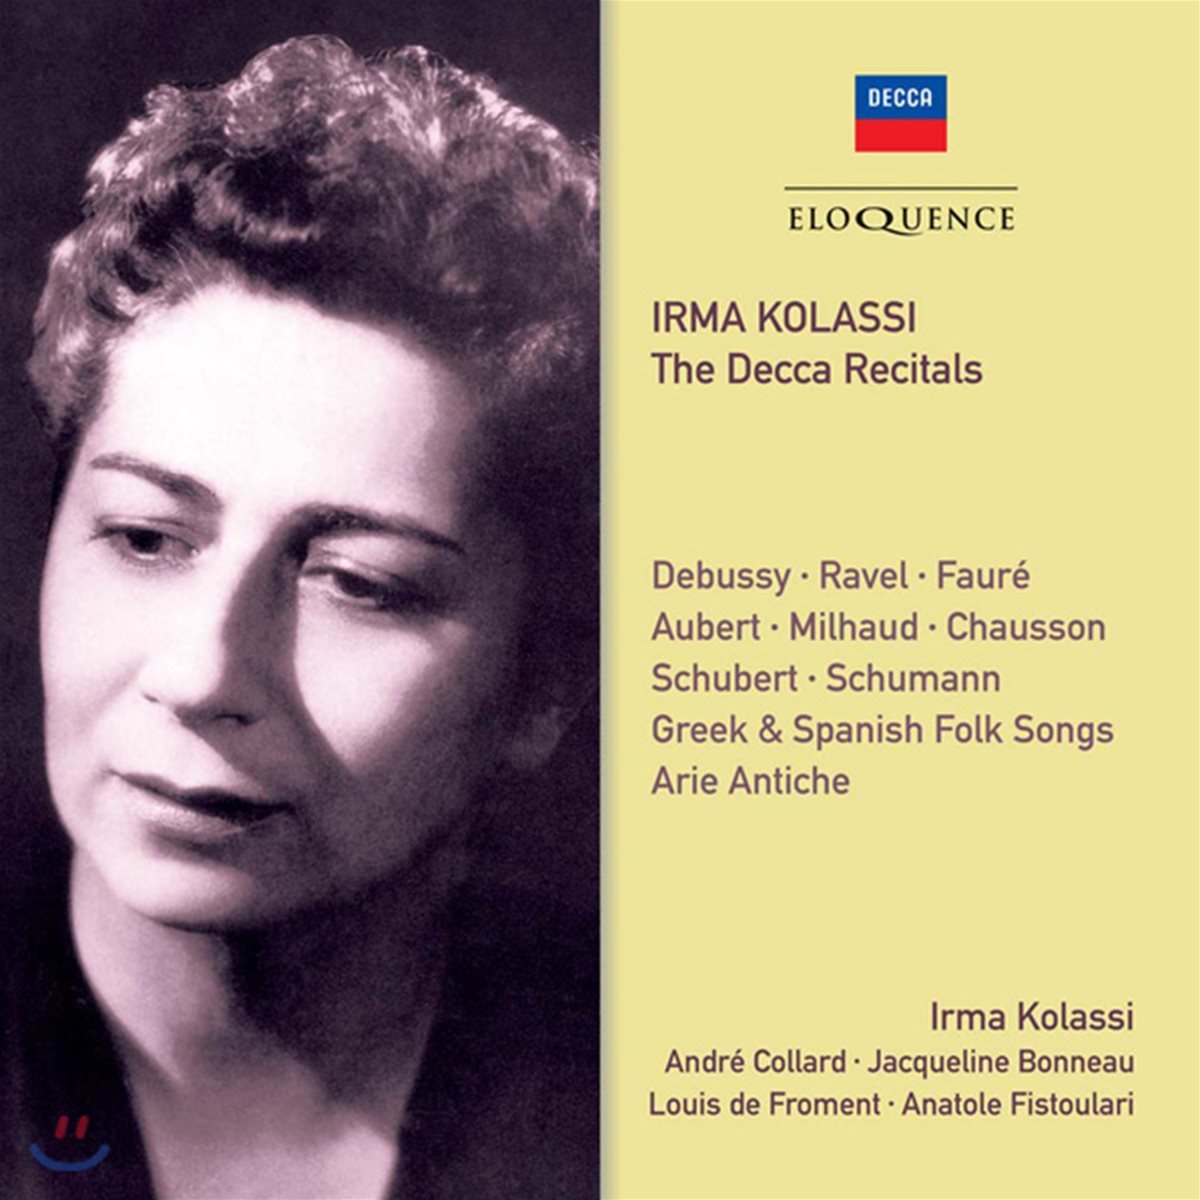 Irma Kolassi 이르마 콜라시 - 데카 리사이틀 (The Decca Recital - Debussy / Ravel / Faure / Aubert / Milhaud / Chausson)